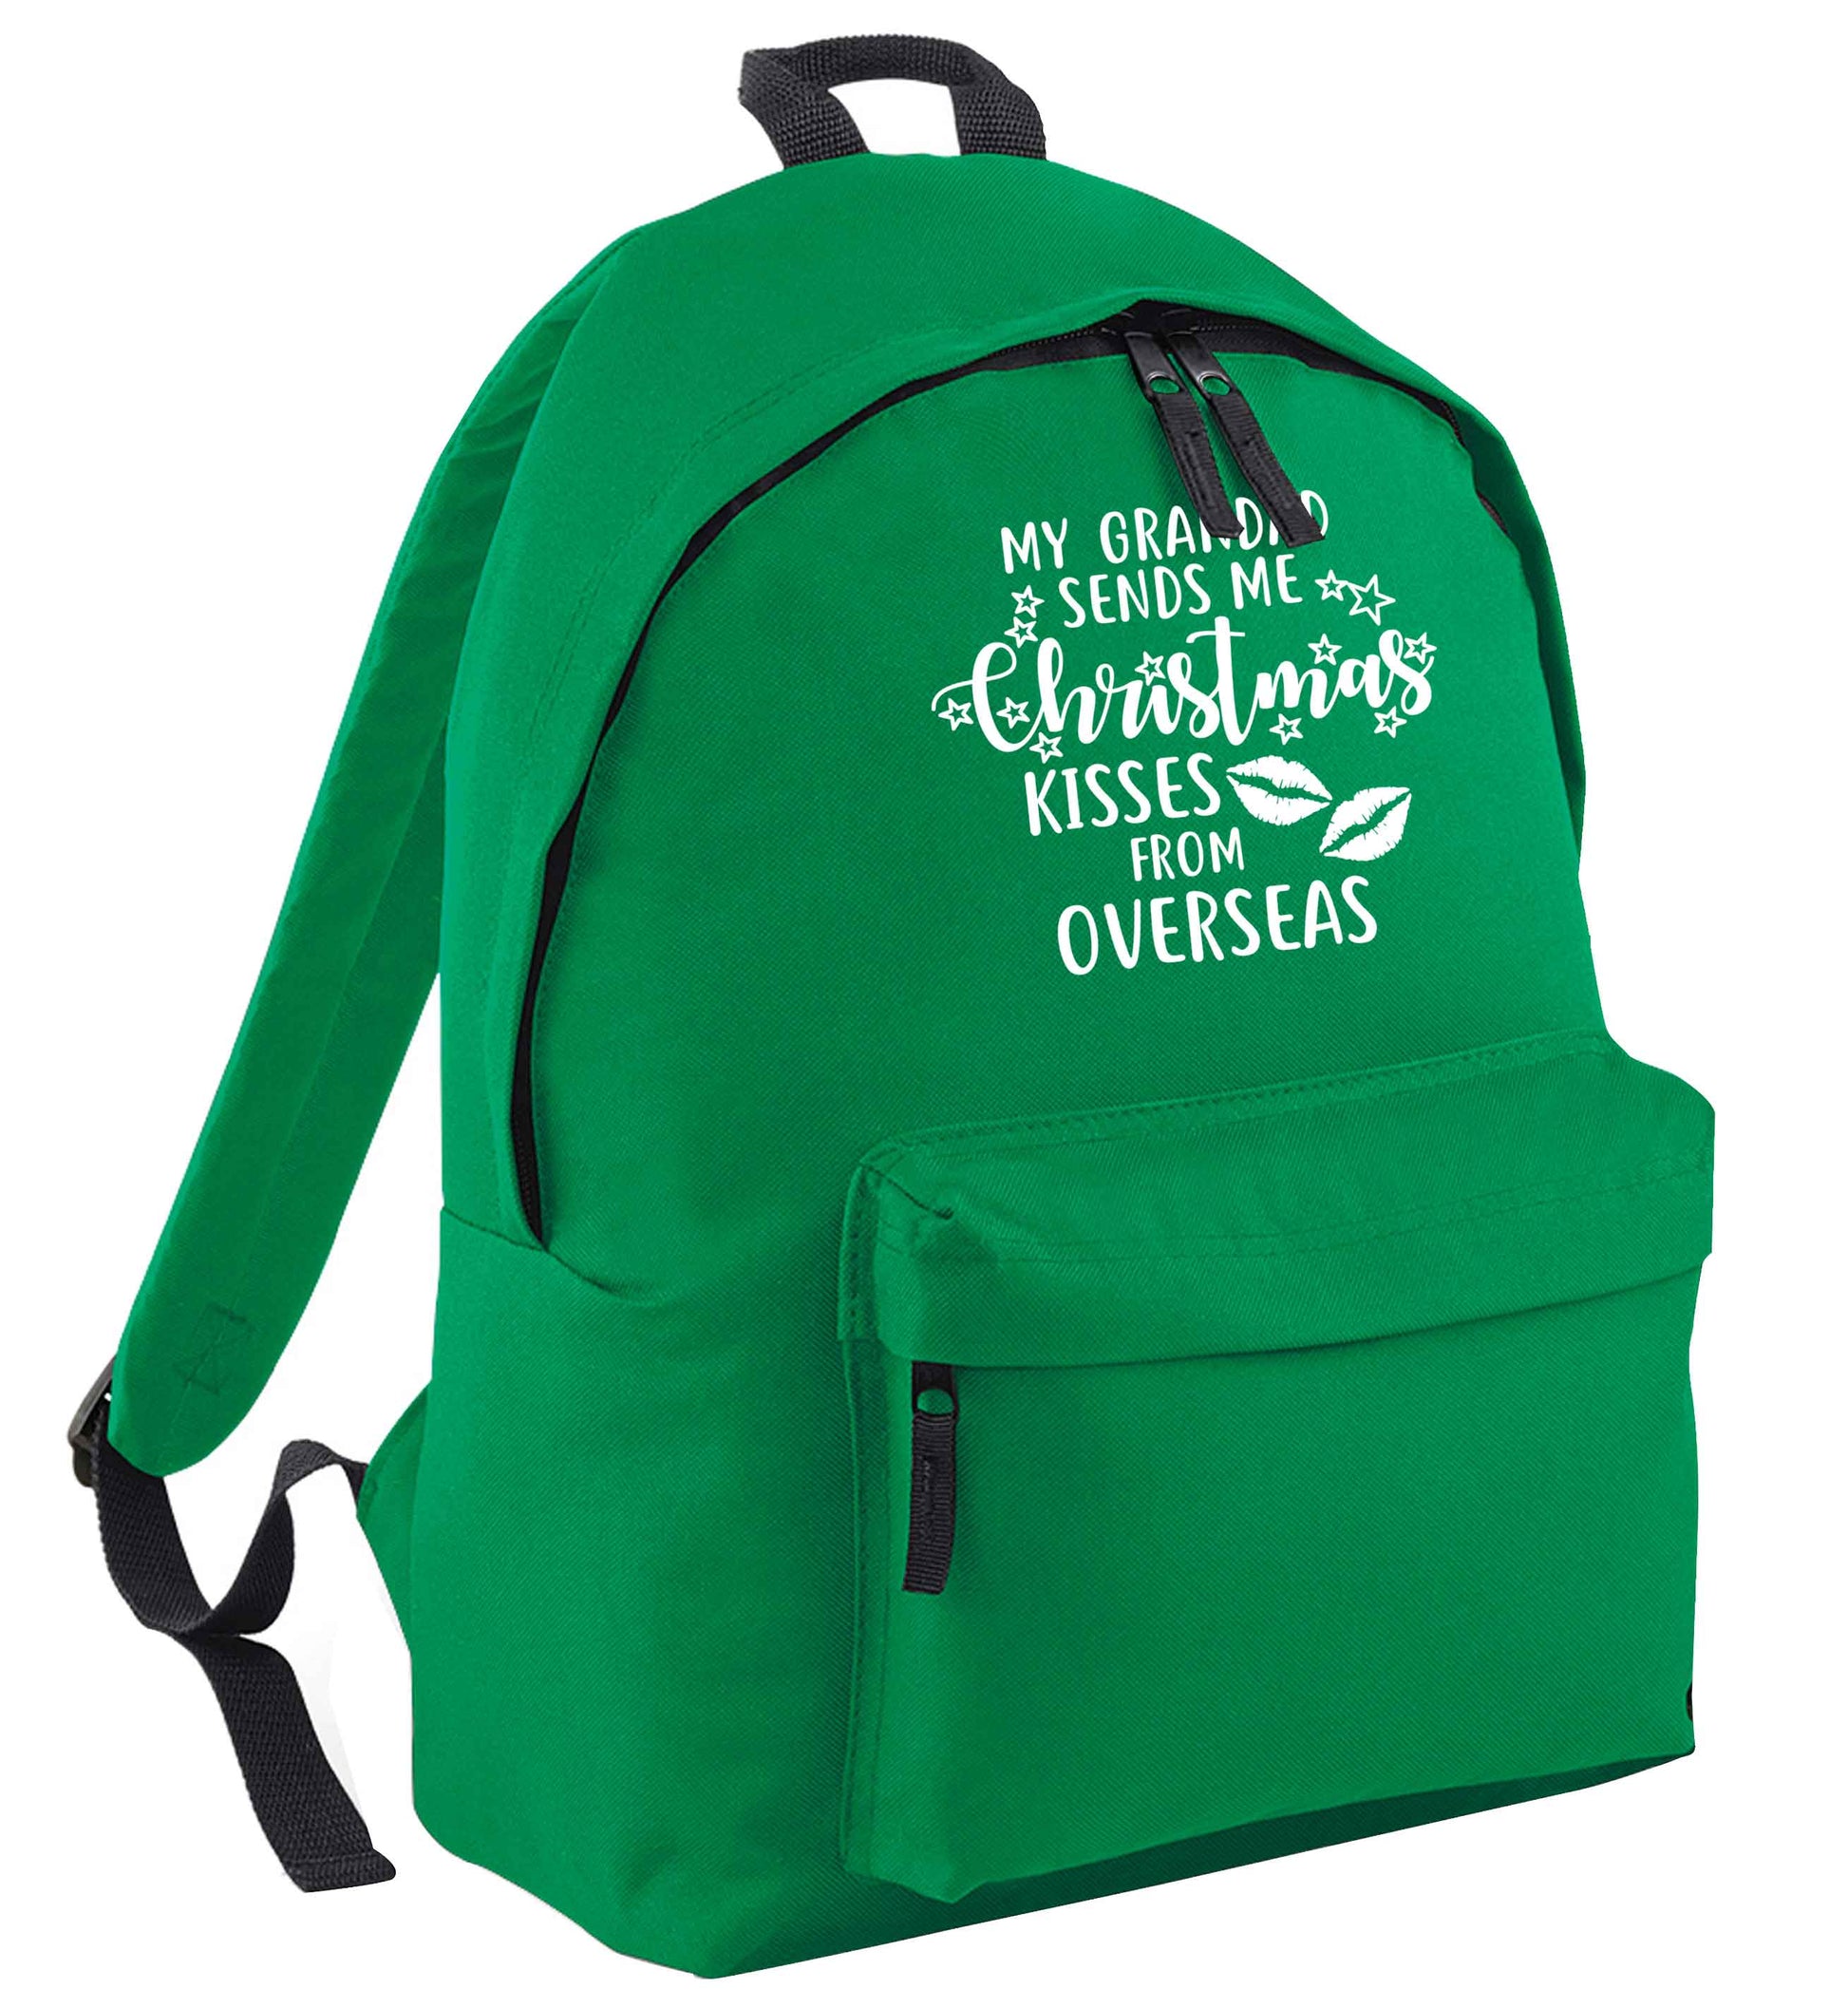 Grandad Christmas Kisses Overseas green adults backpack